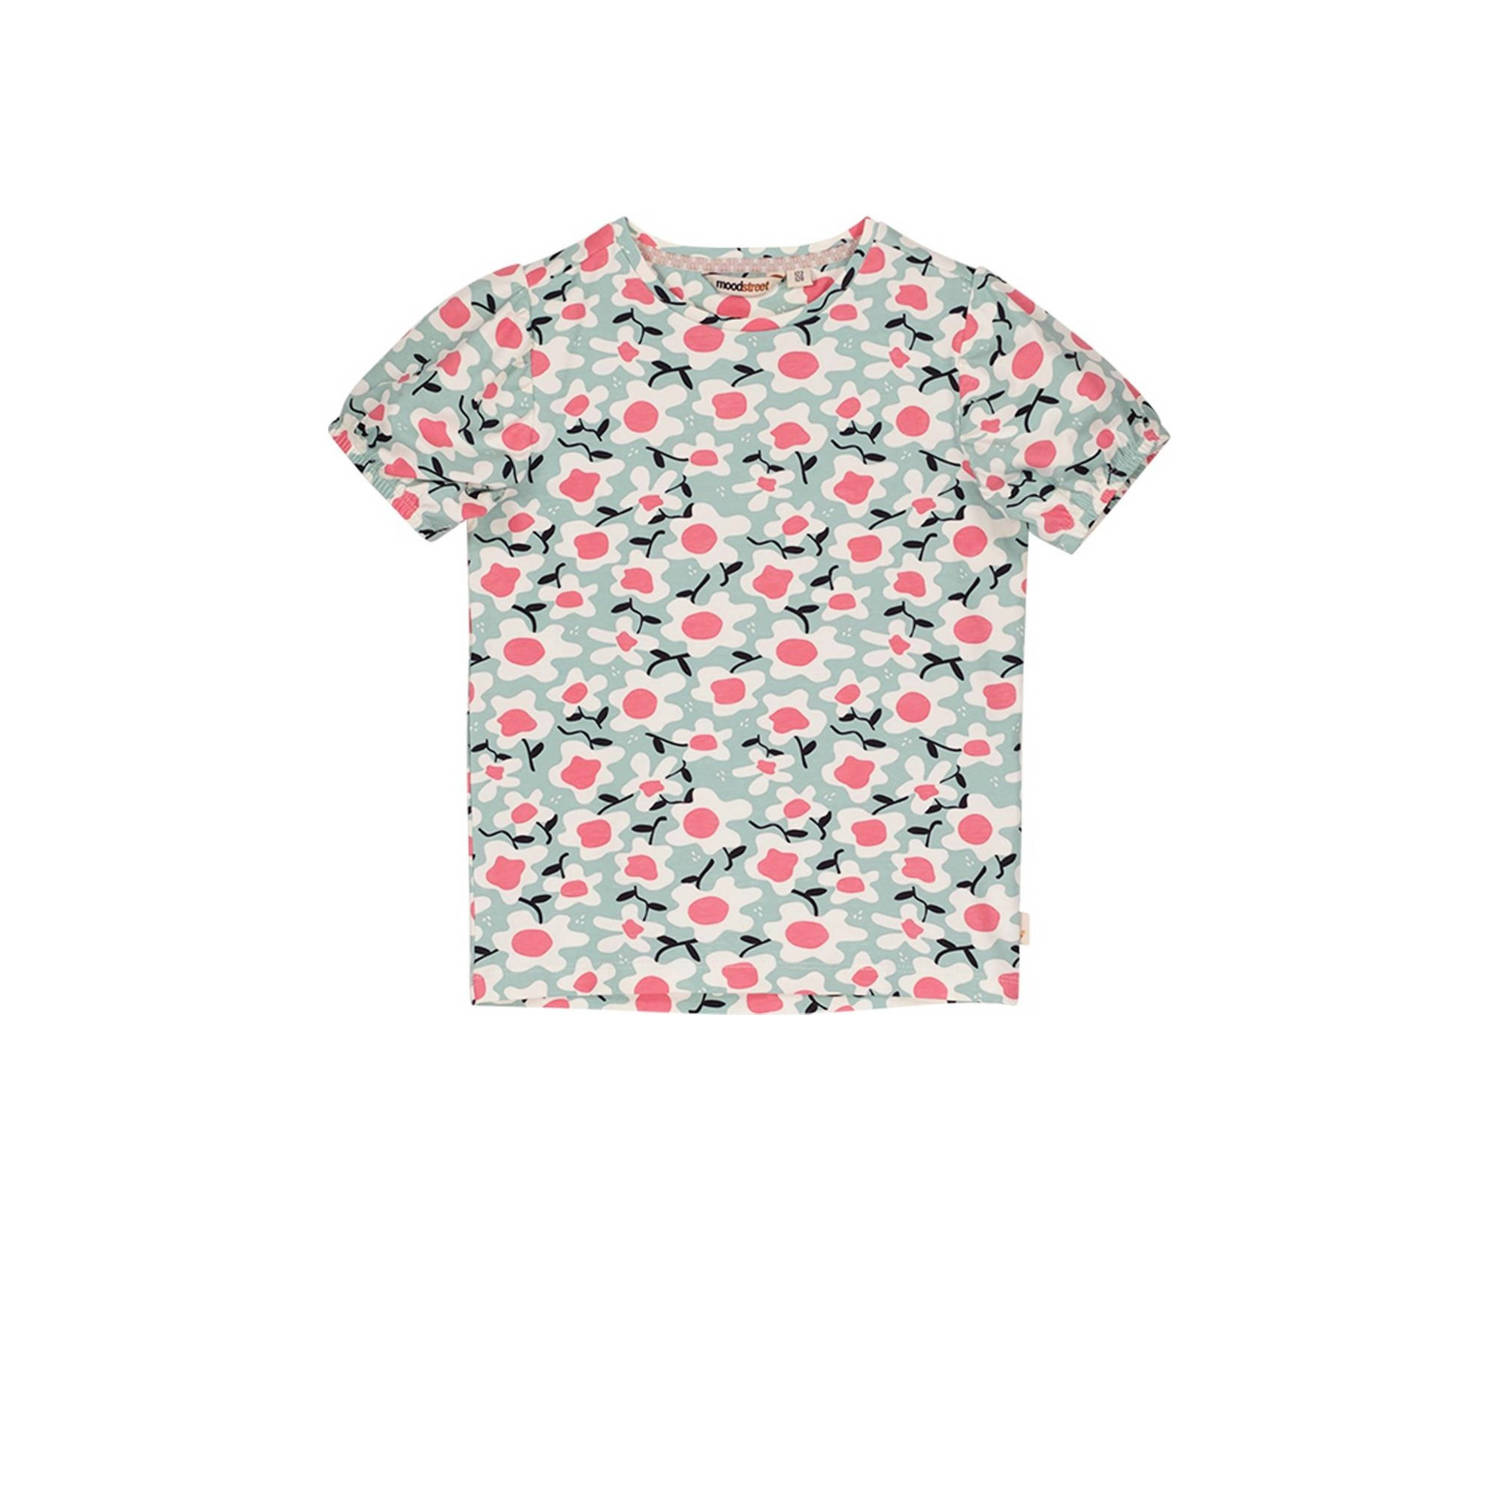 Moodstreet gebloemd T-shirt mintgroen roze offwhite